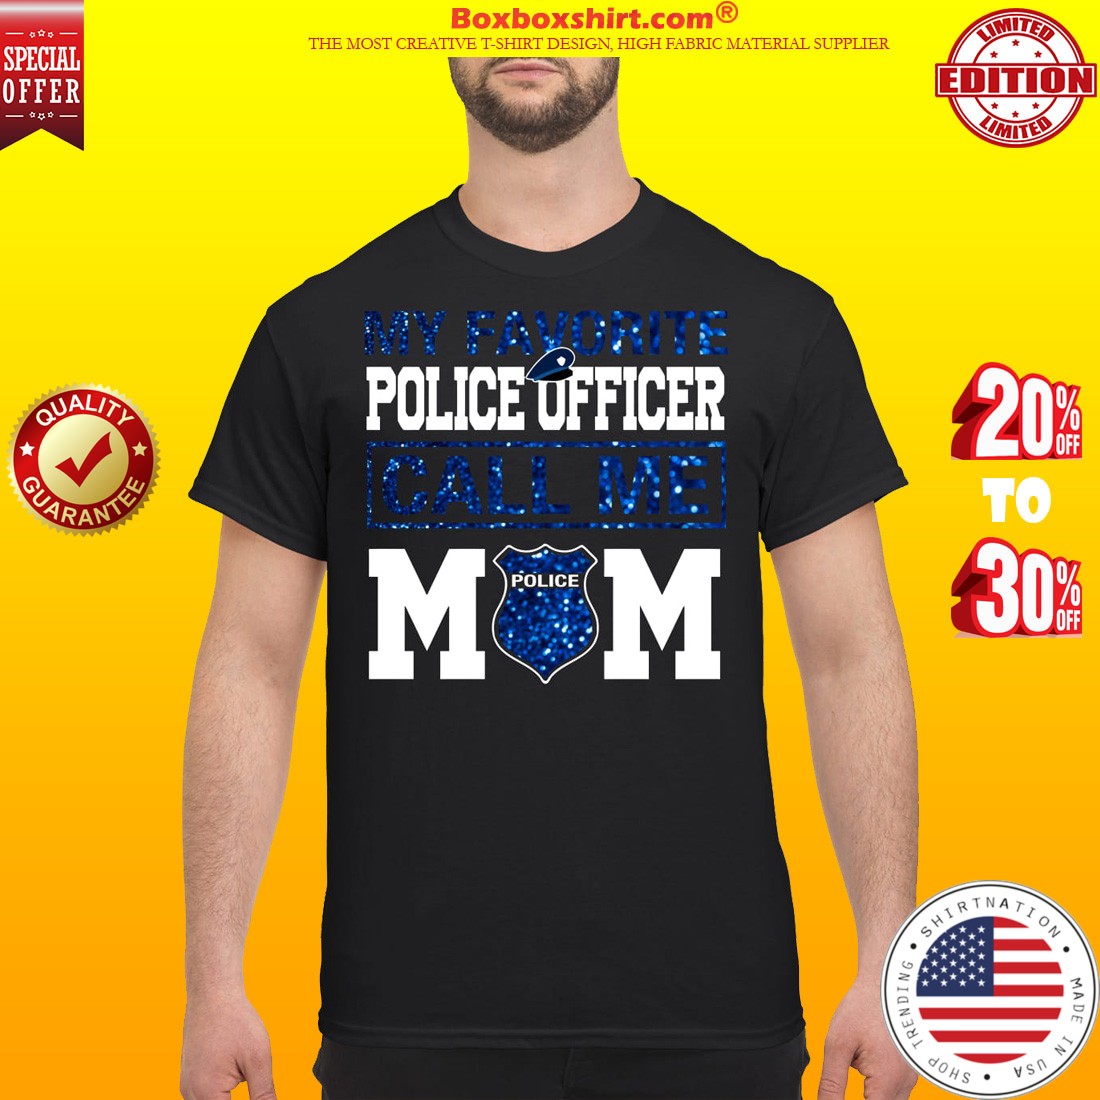 My favorite officer call me mom shirt